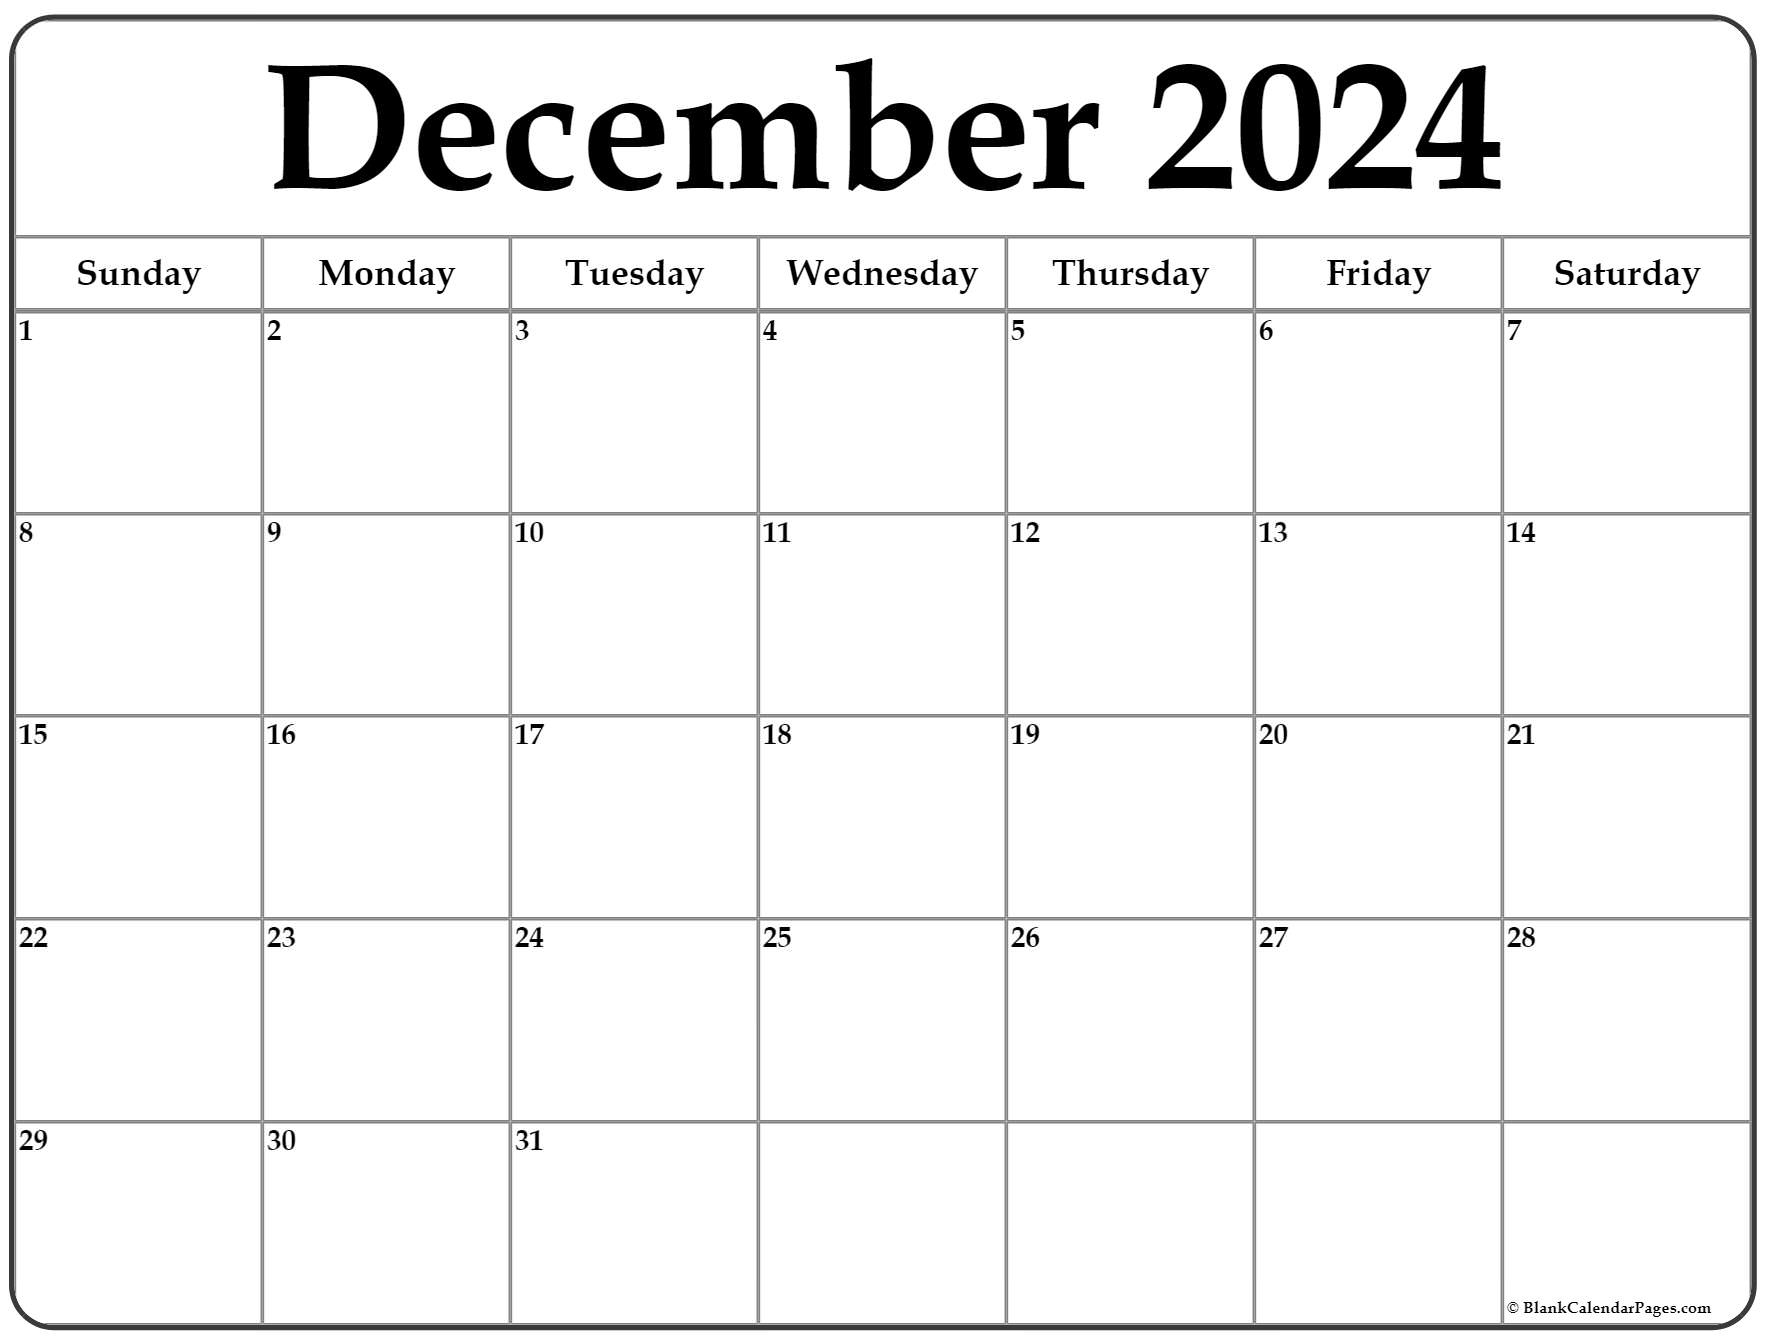 December 2024 Calendar | Free Printable Calendar in Free Printable Blank December 2024 Calendar